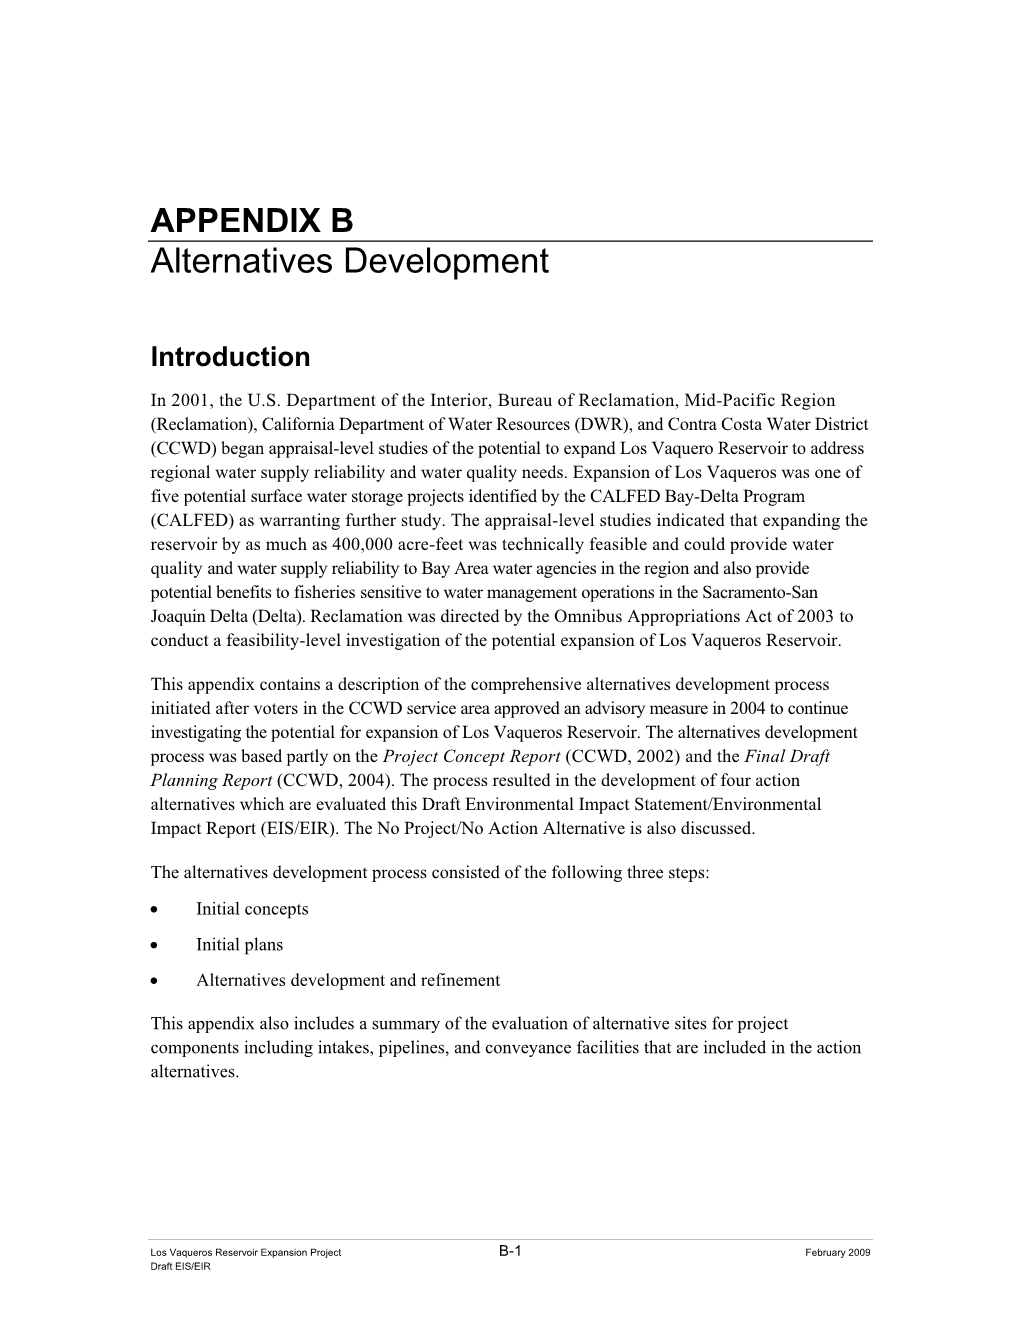 APPENDIX B Alternatives Development